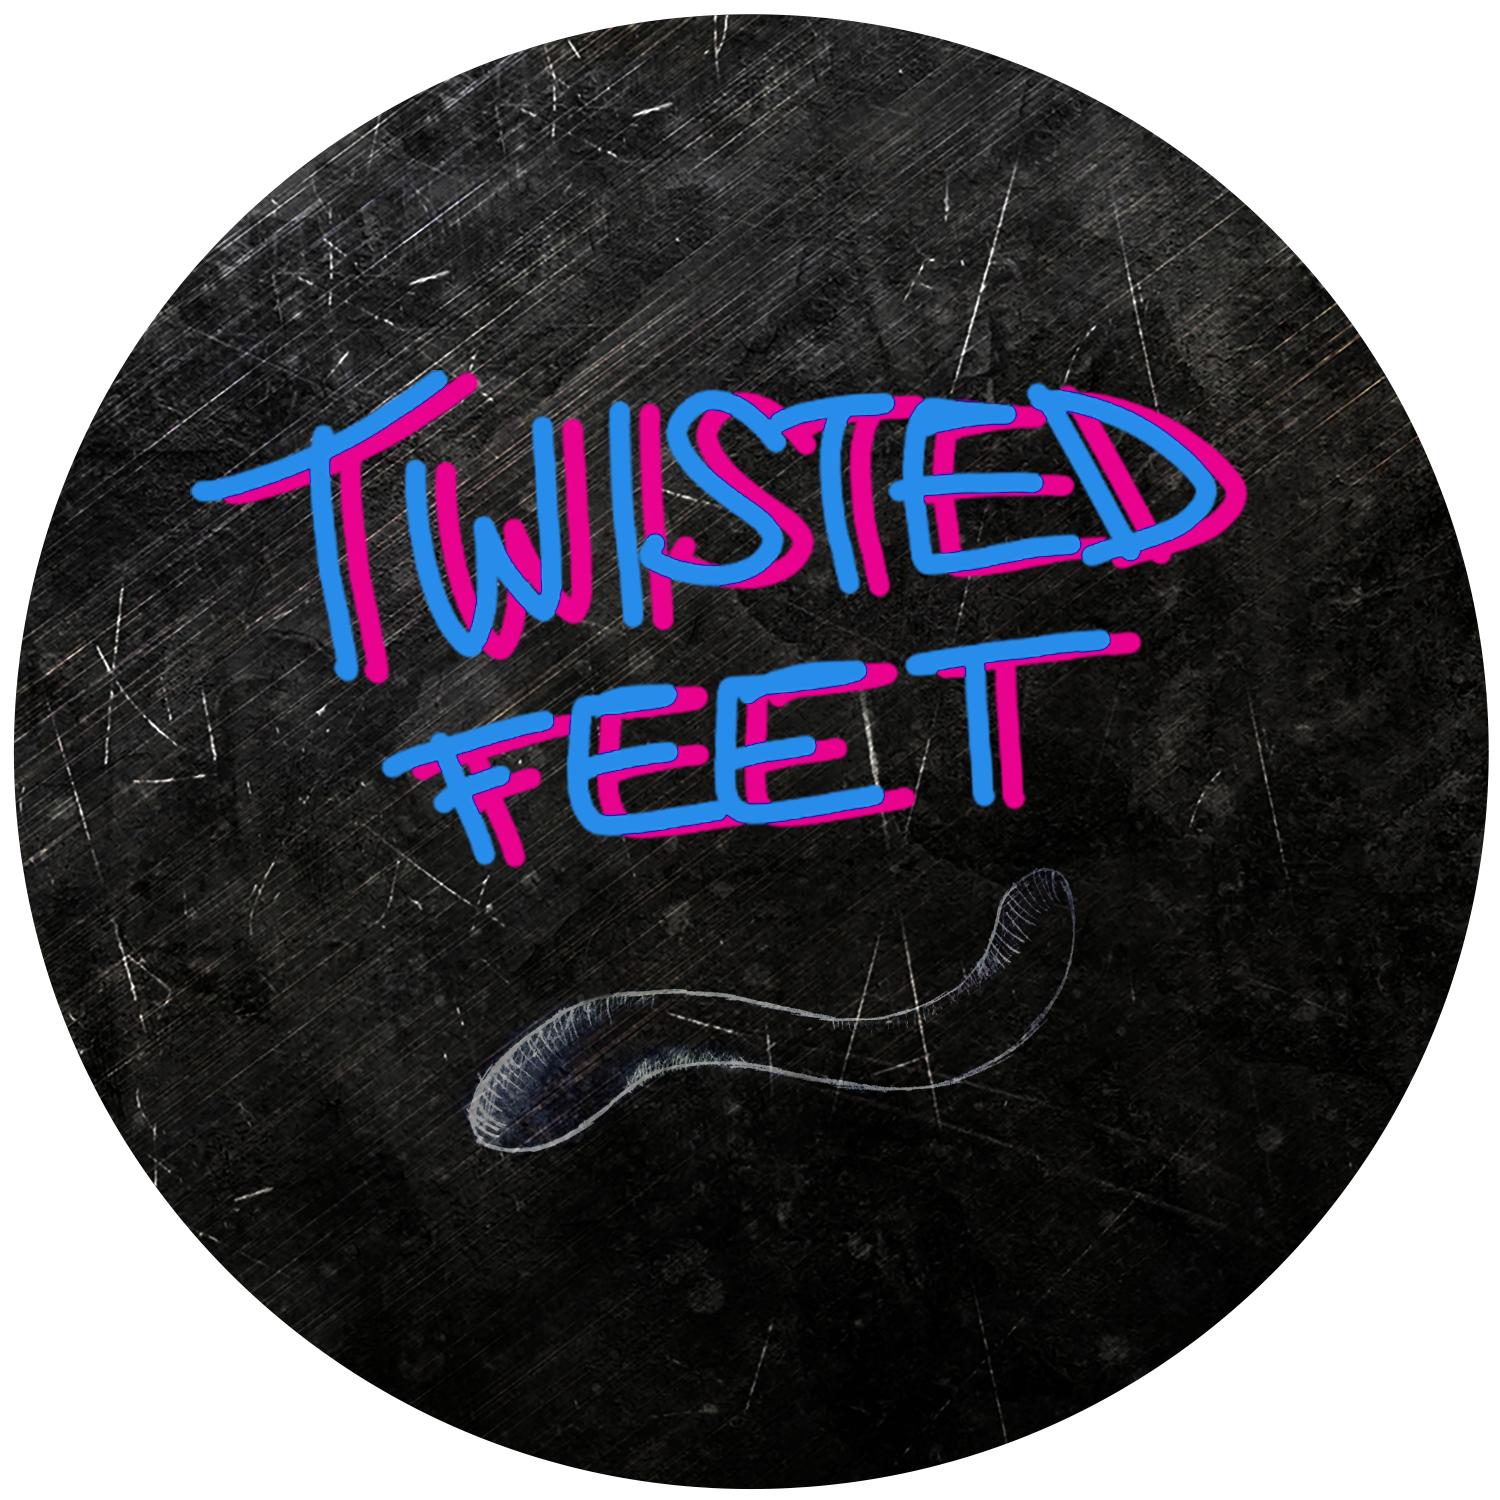 Twisted feet